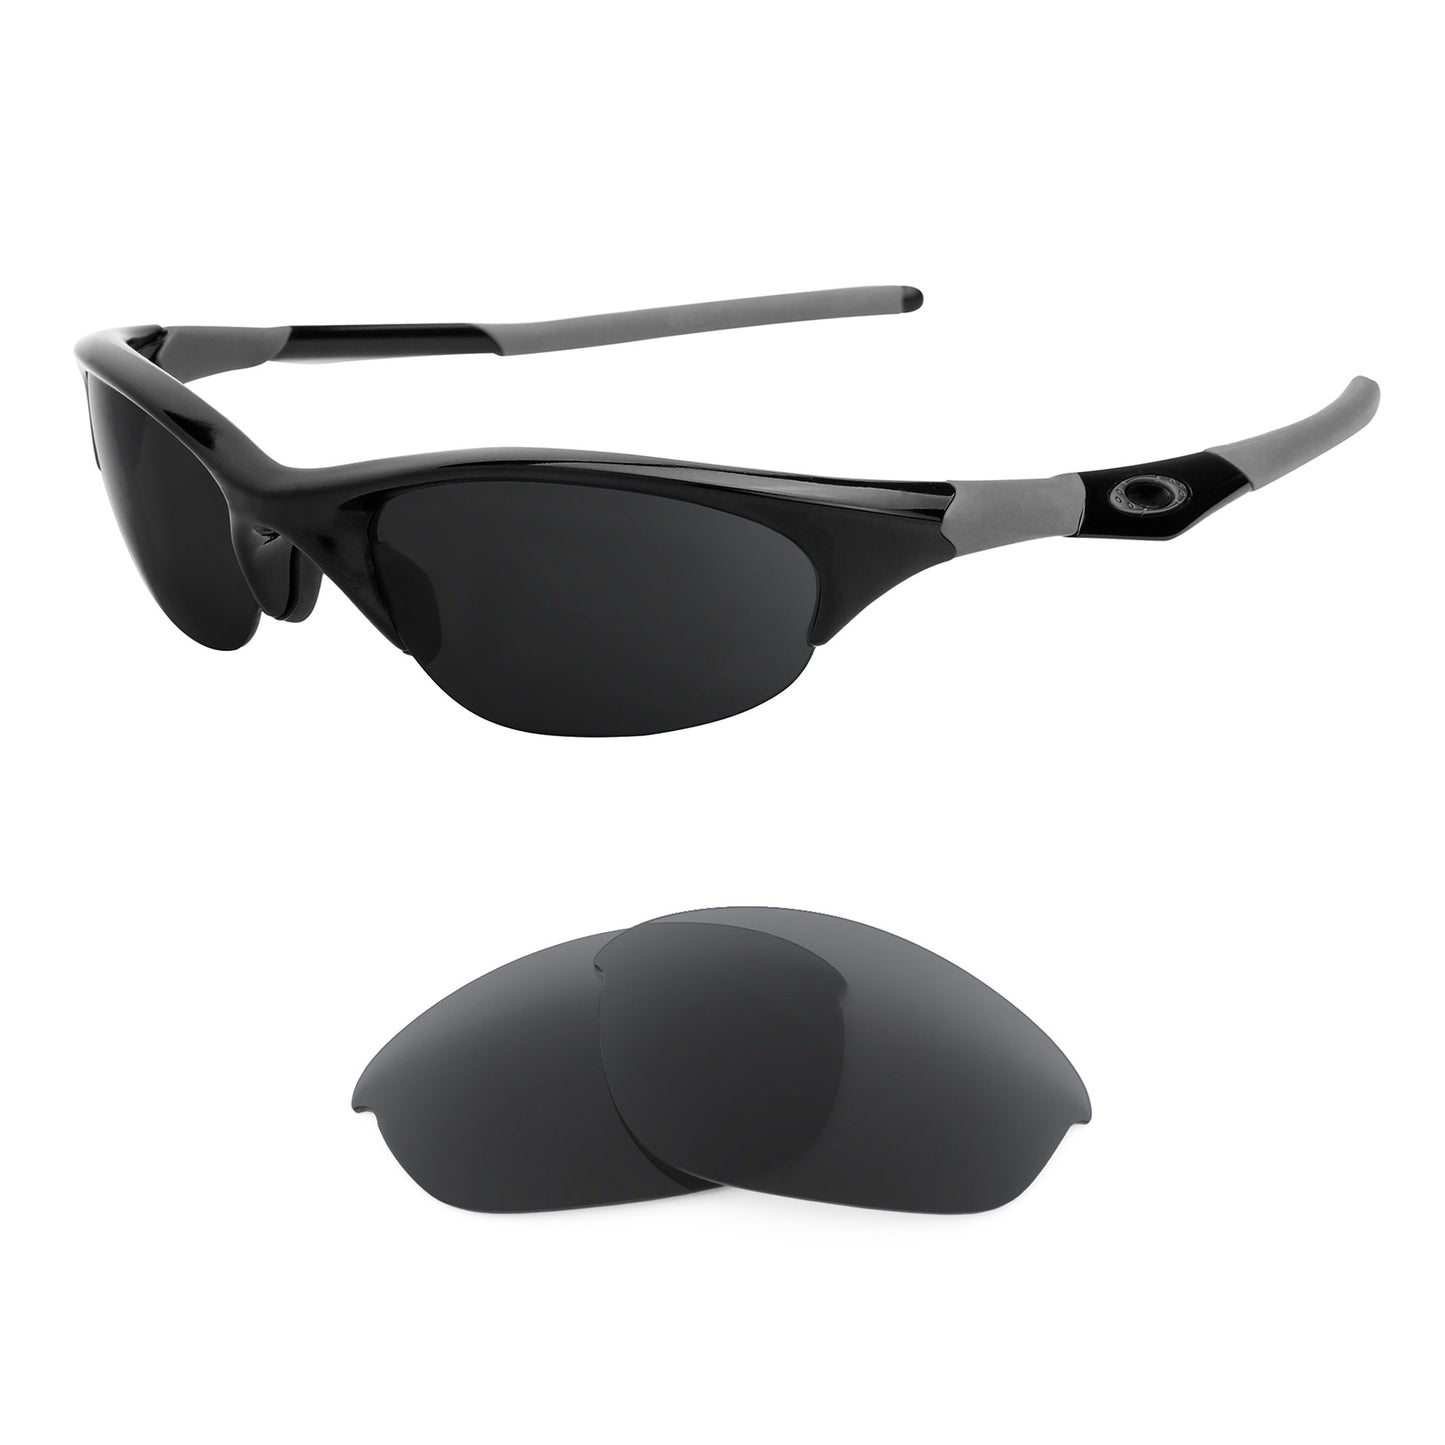 Oakley Half Jacket (Low Bridge Fit) sunglasses with replacement lenses